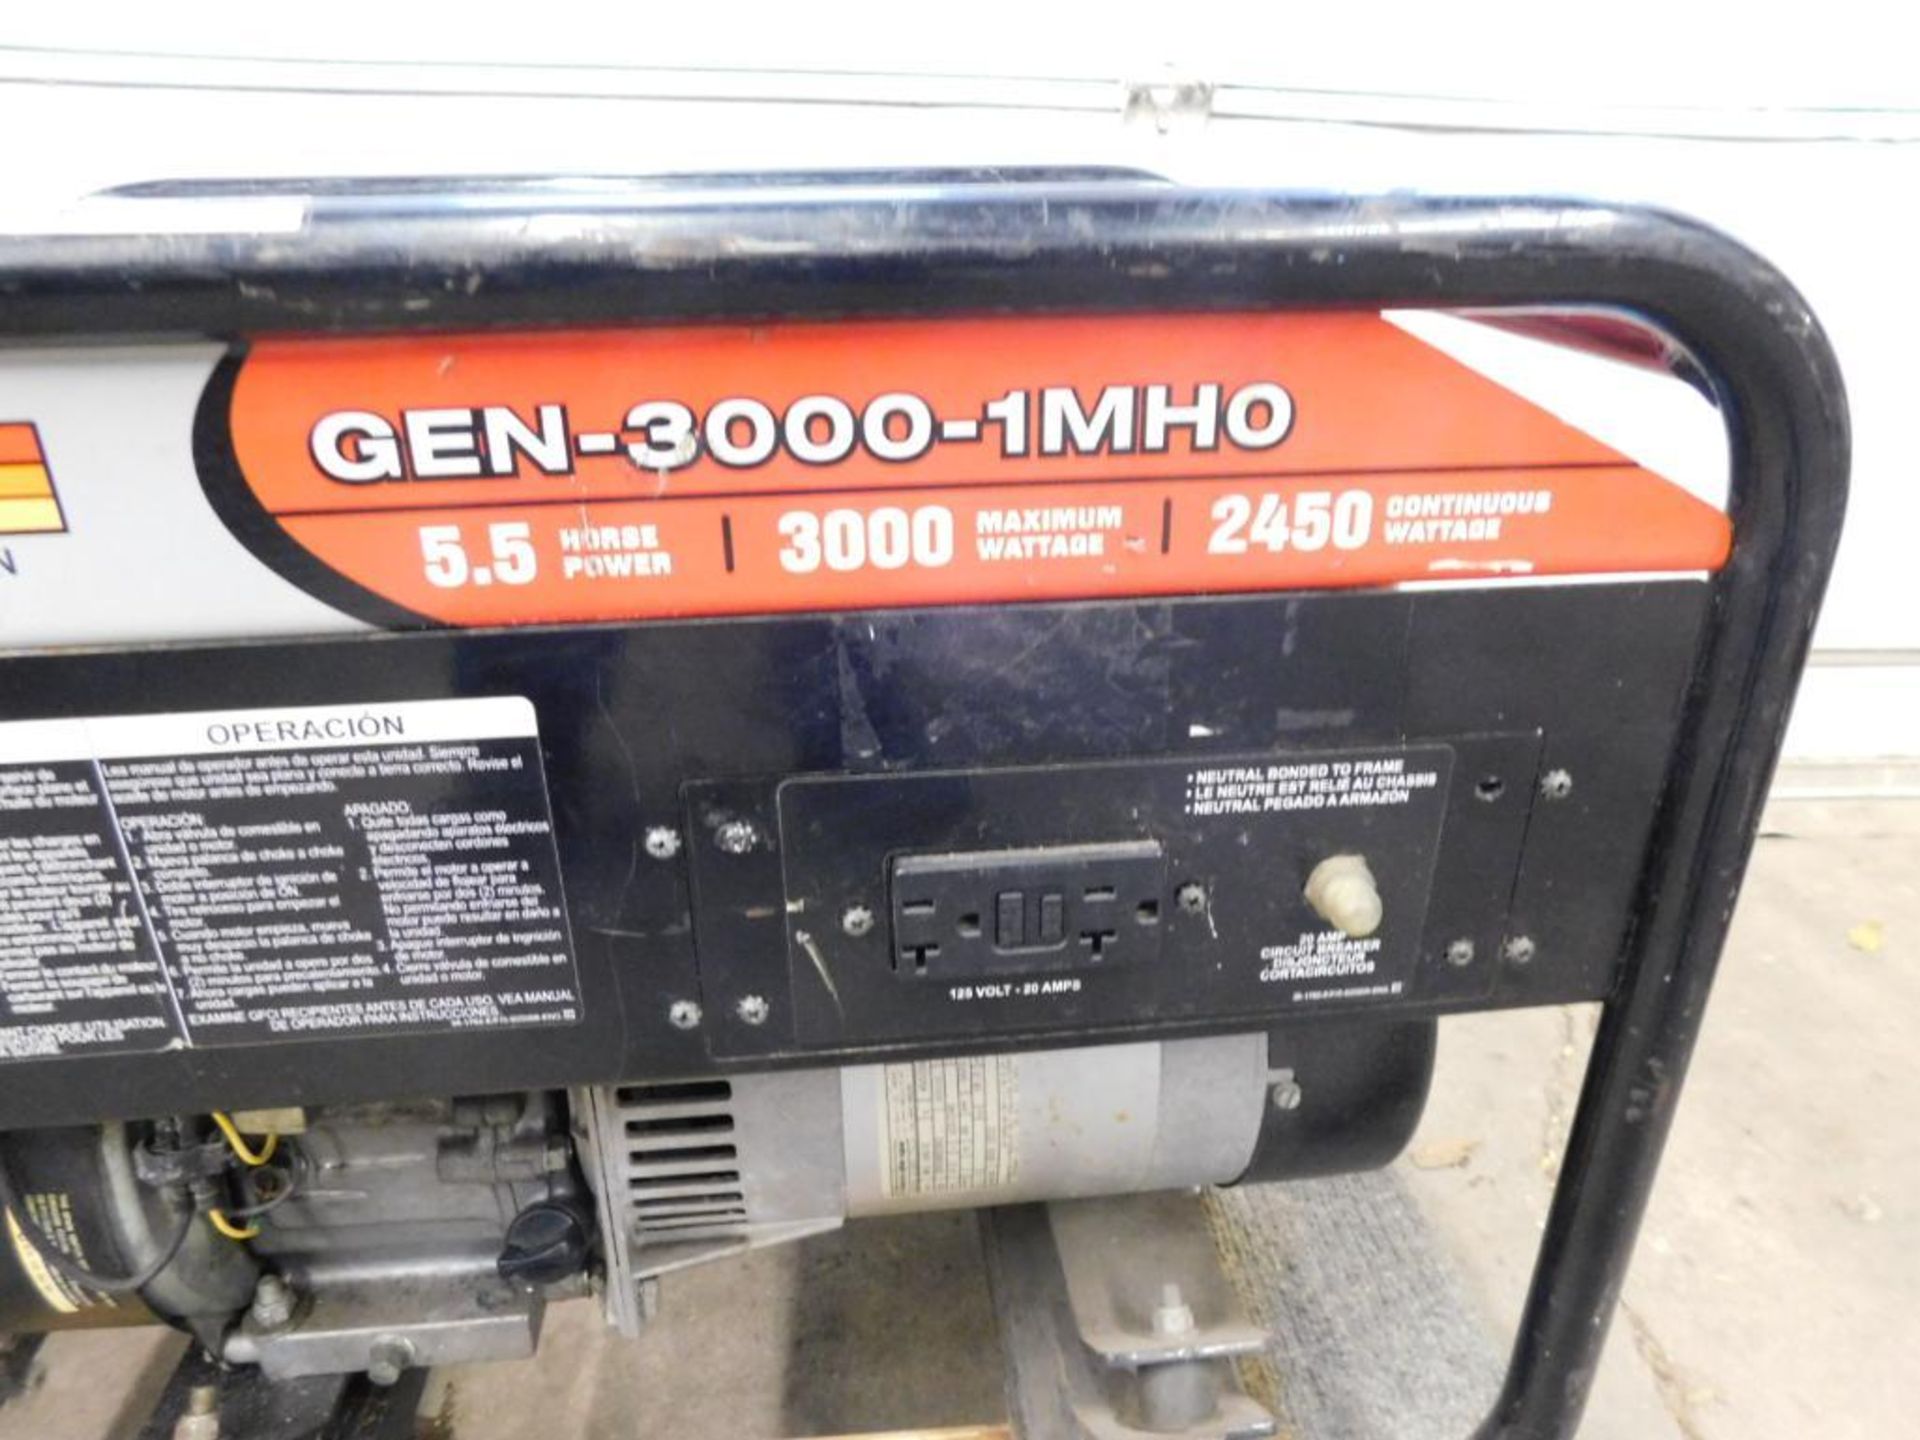 Mi-T-M Gen-3000-1MHO 3000 Watt Gas Generator w/Honda GX160 5.5 Motor, S/N 40029972, 01-18 amp. (#29) - Image 2 of 8